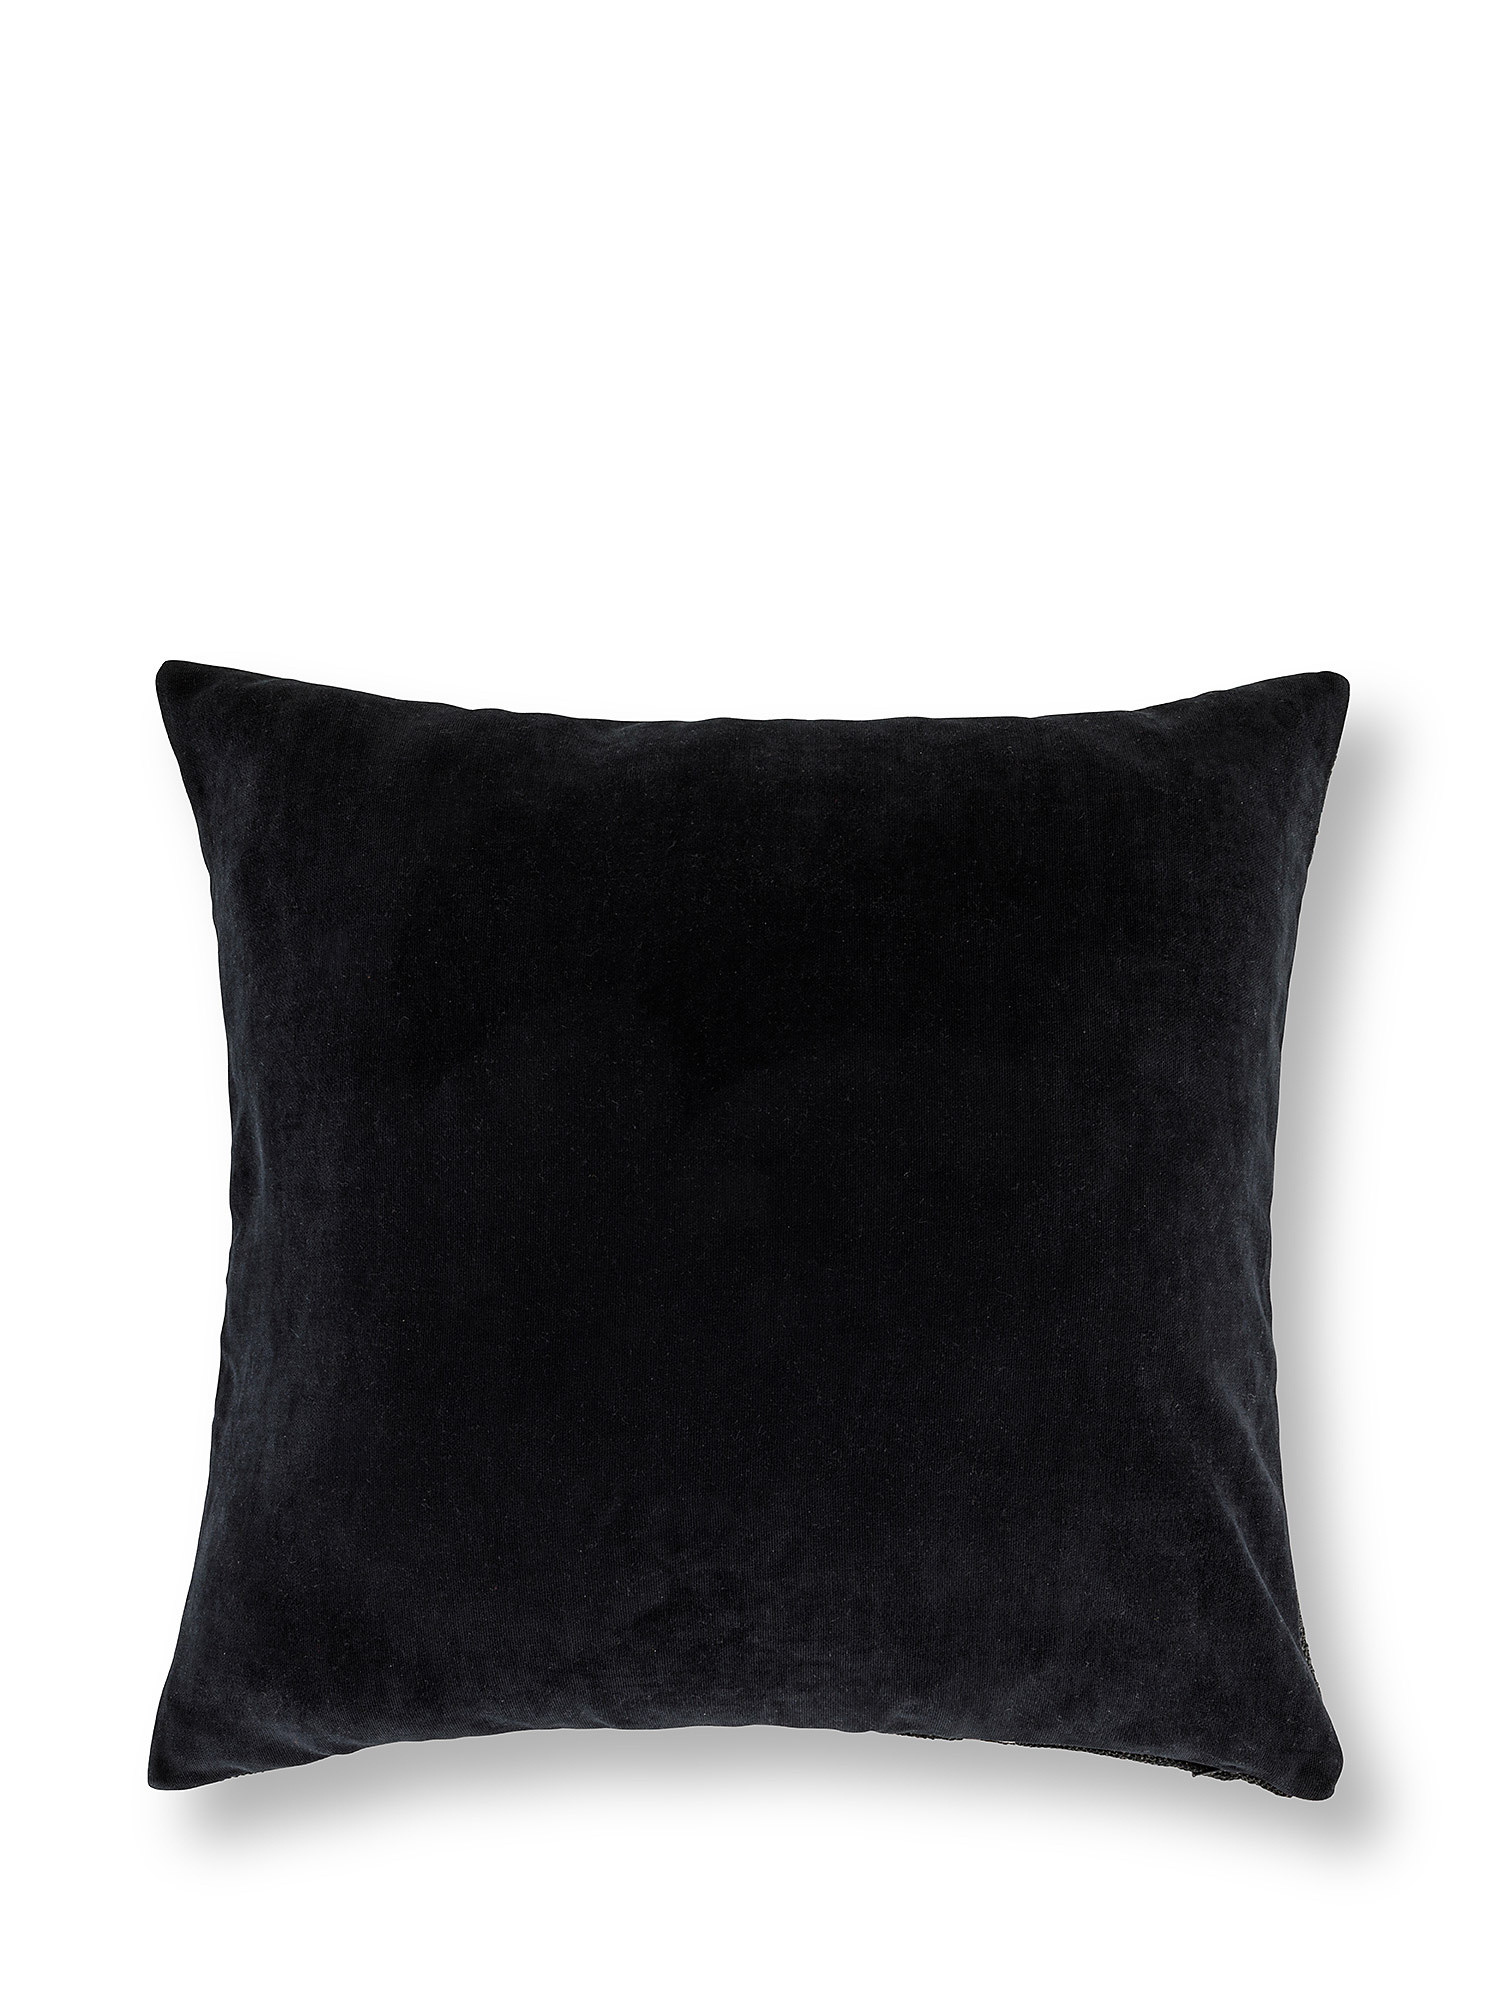 Jacquard cushion with geometric motif 50x50cm, Black, large image number 1